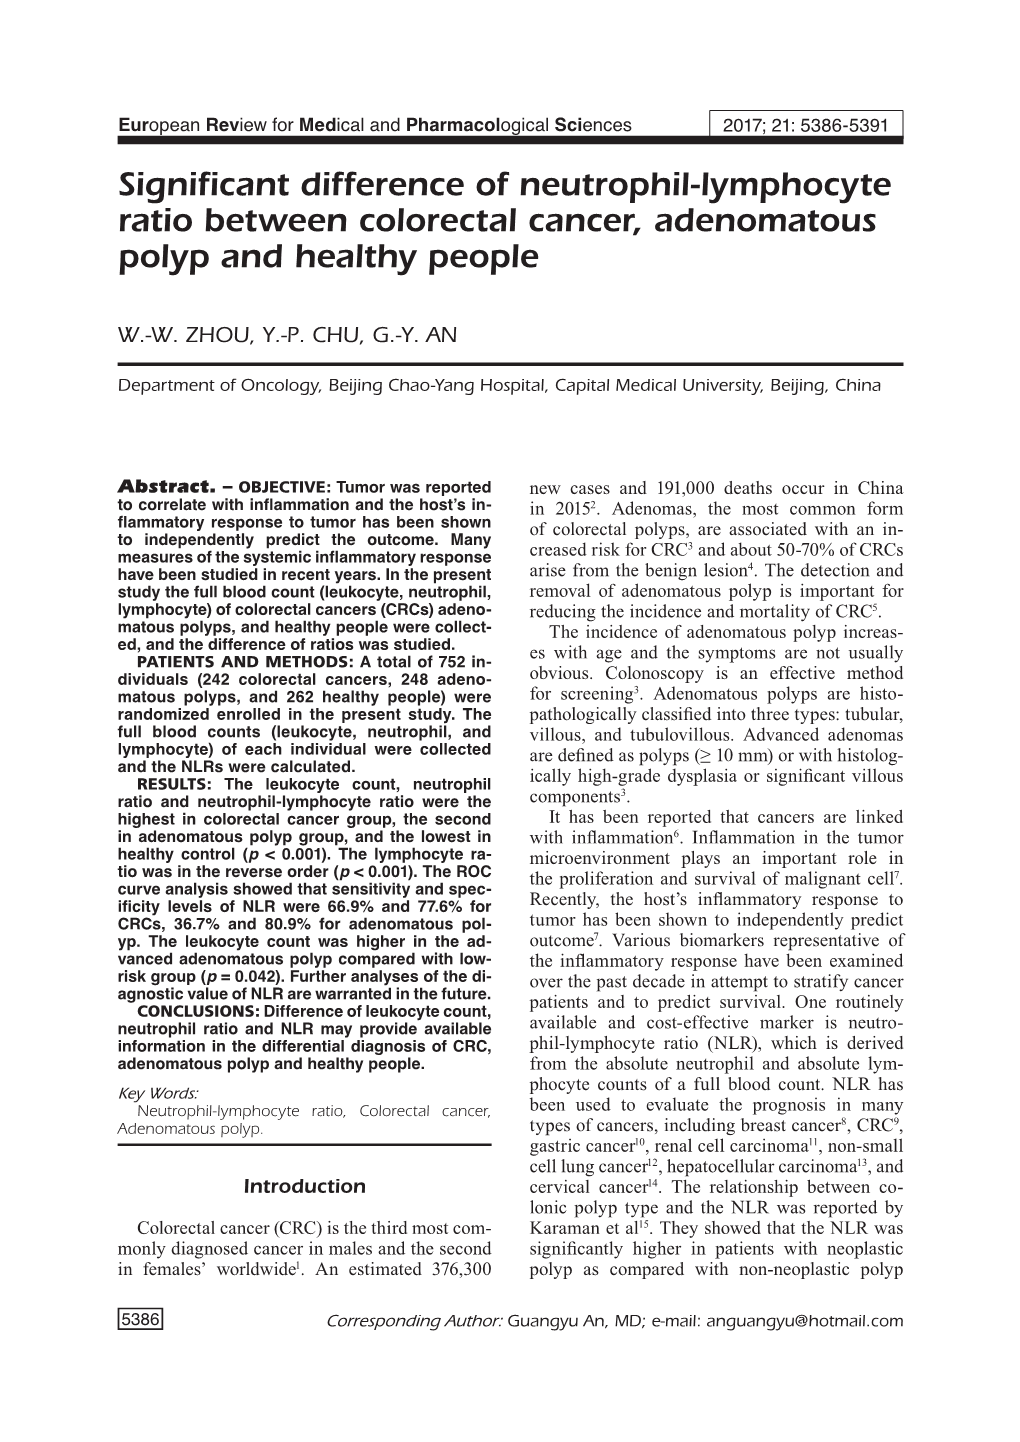 Neutrophil-Lymphocyte Ratio Between Crcs, Adenomatous Polyp and Healthy People Group